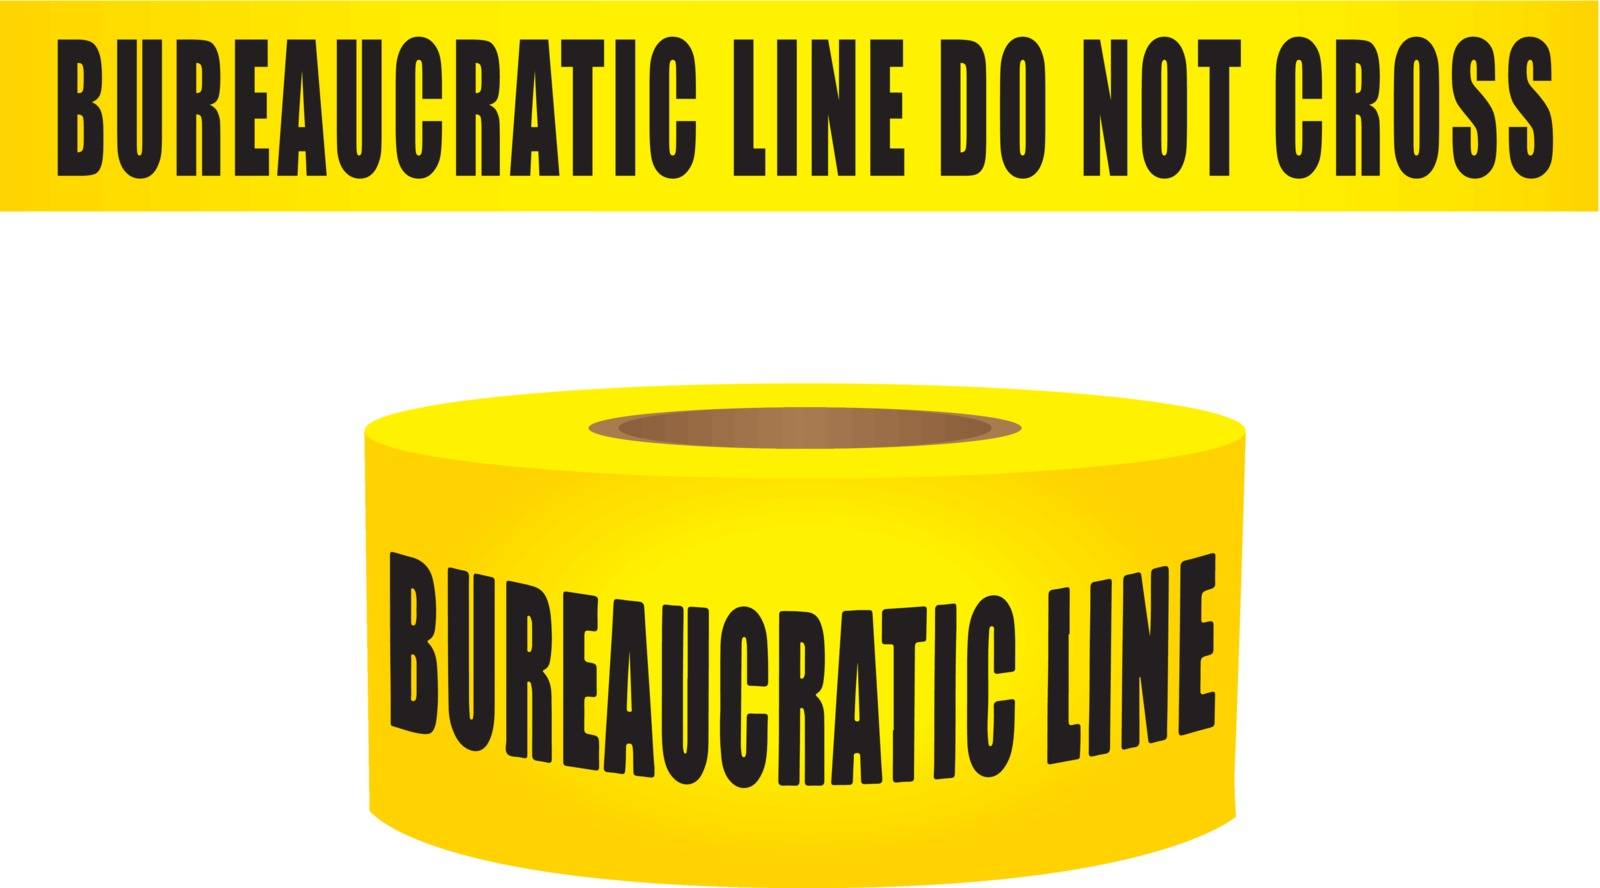 Restrictive yellow ribbon prohibiting passage bureaucratic line do not cross. Vector illustration.